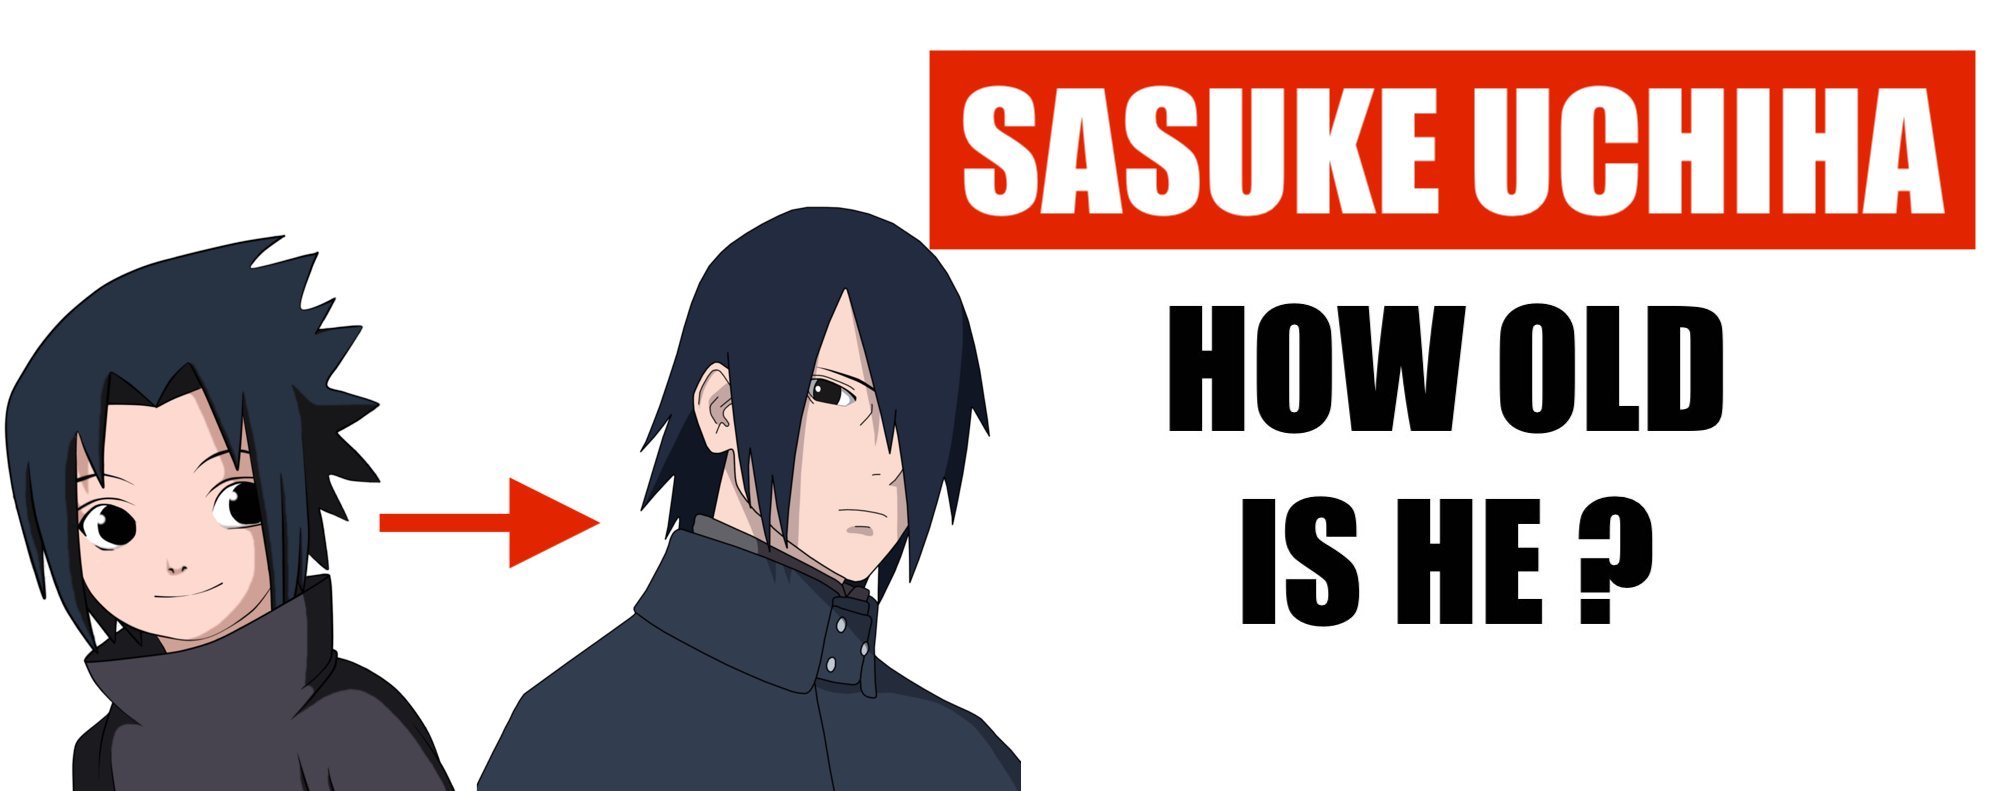 how old is sasuke uchiha